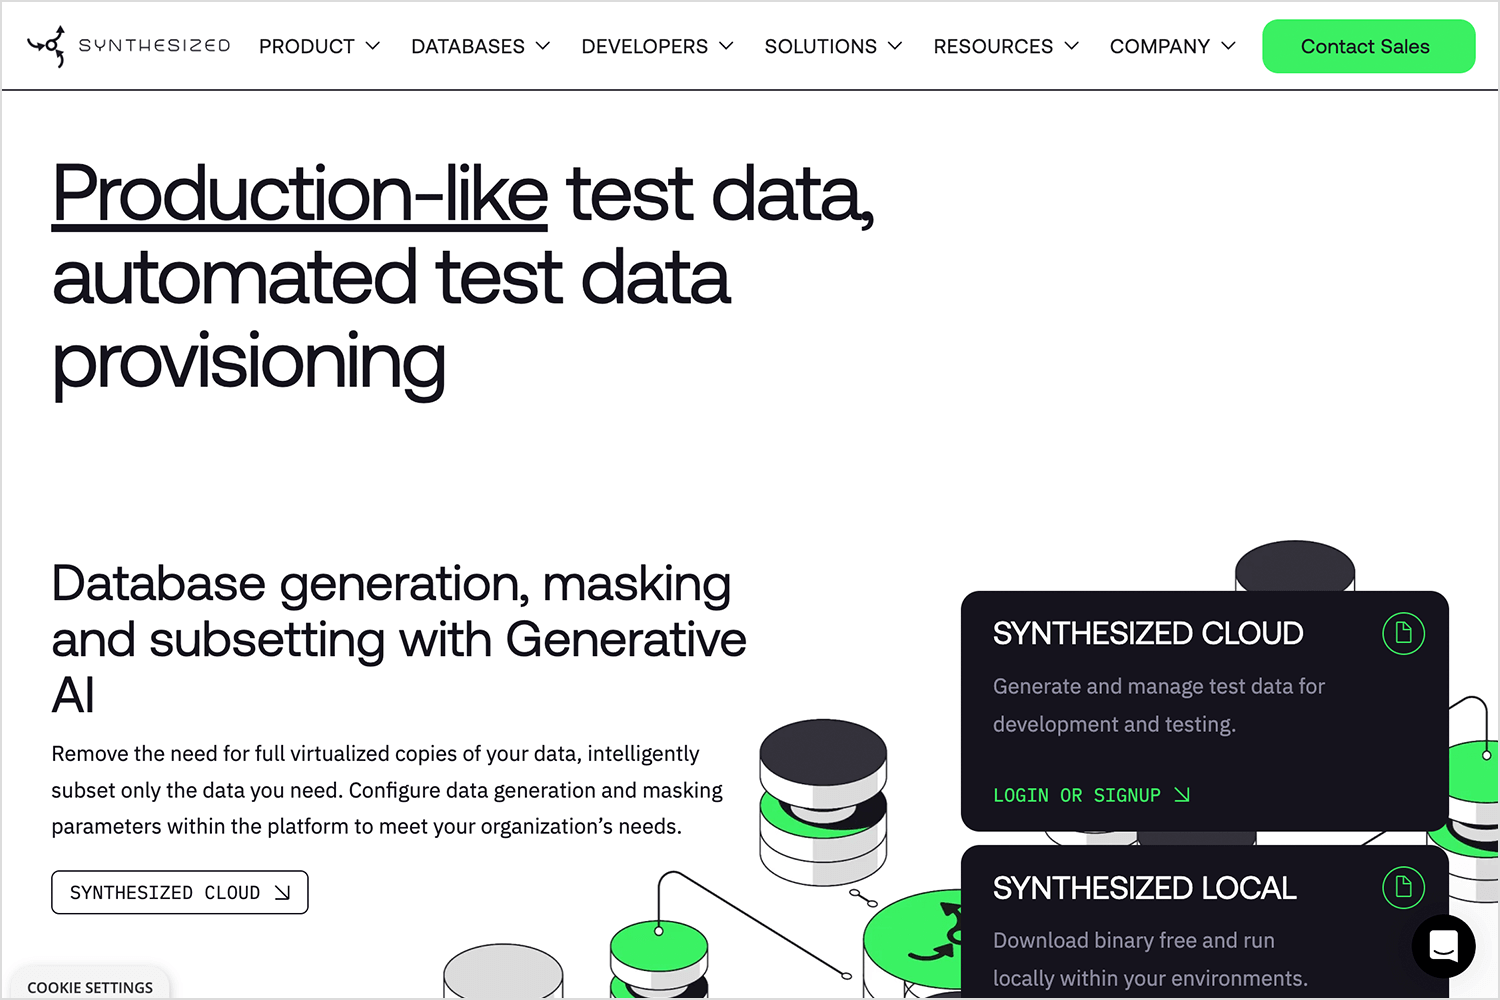 Hero image showcasing Synthesized's database generation and AI solutions